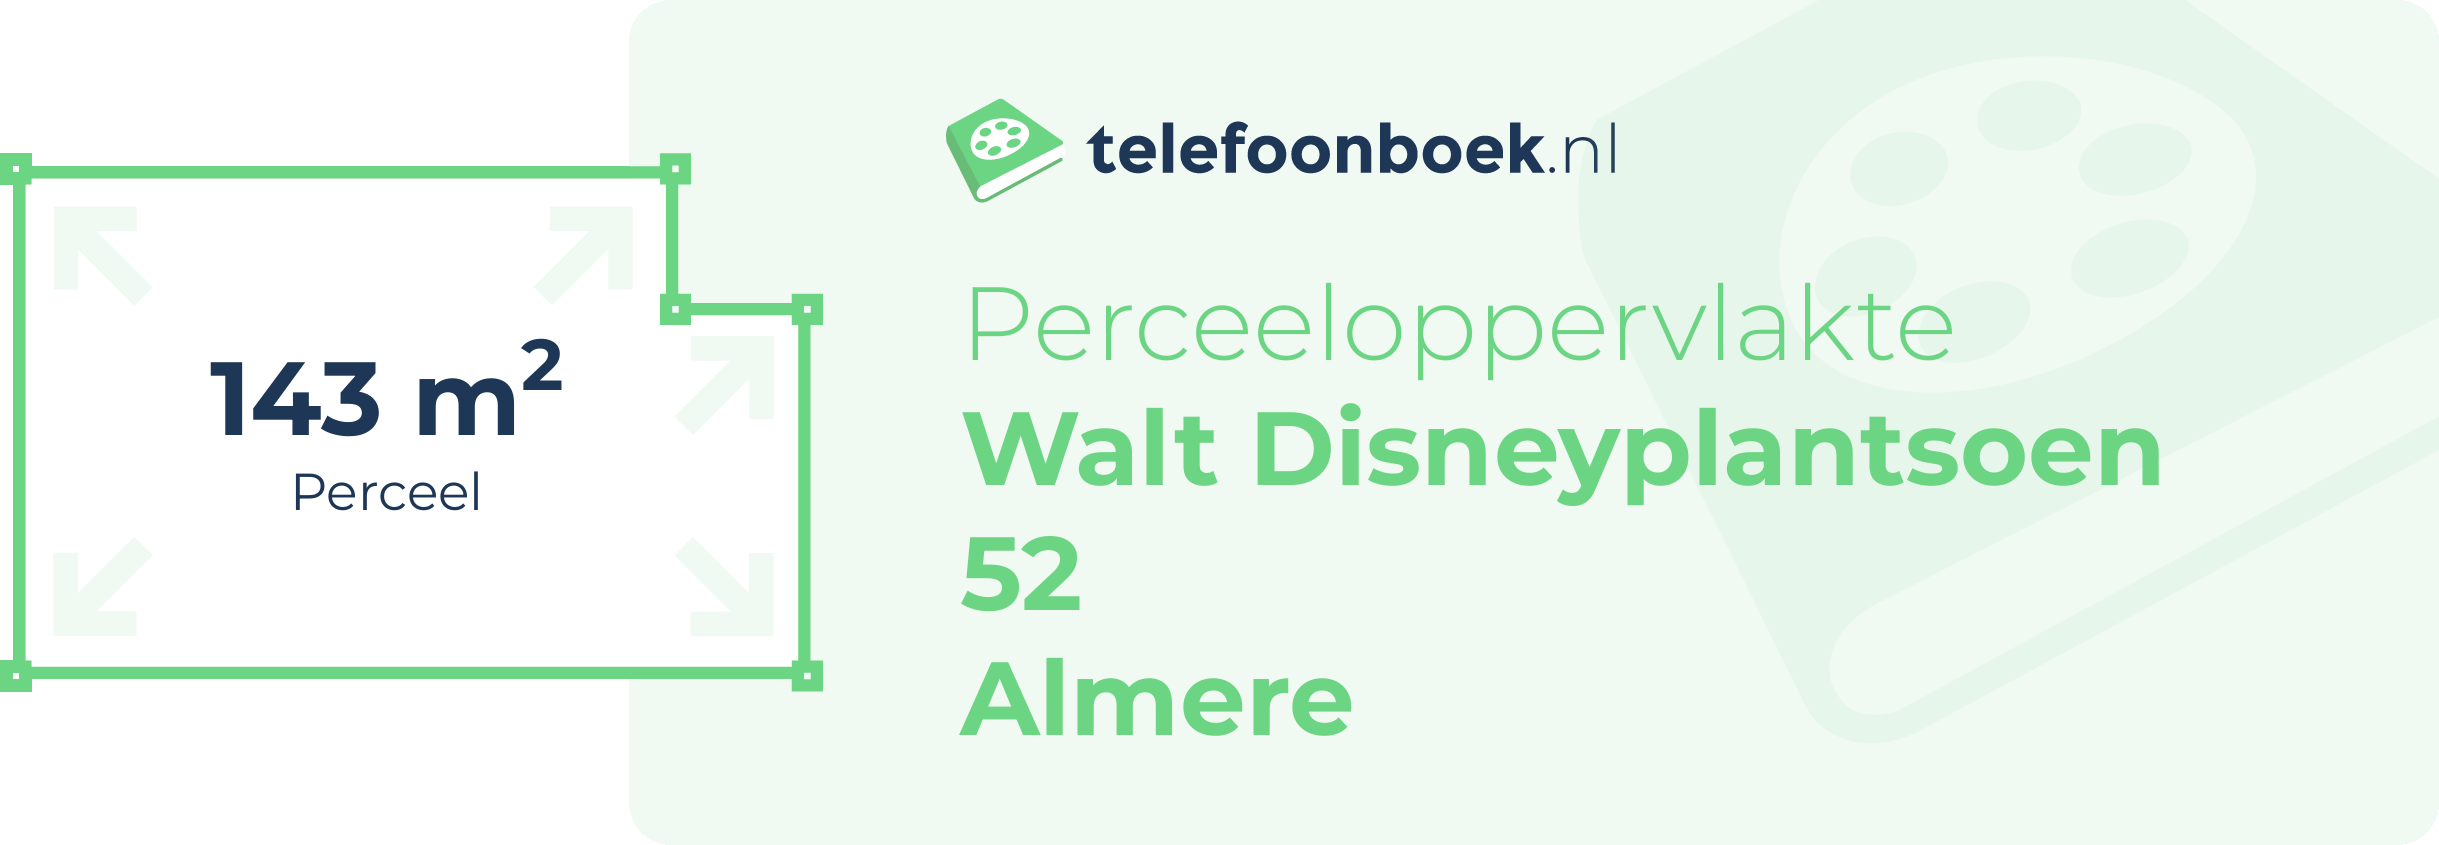 Perceeloppervlakte Walt Disneyplantsoen 52 Almere